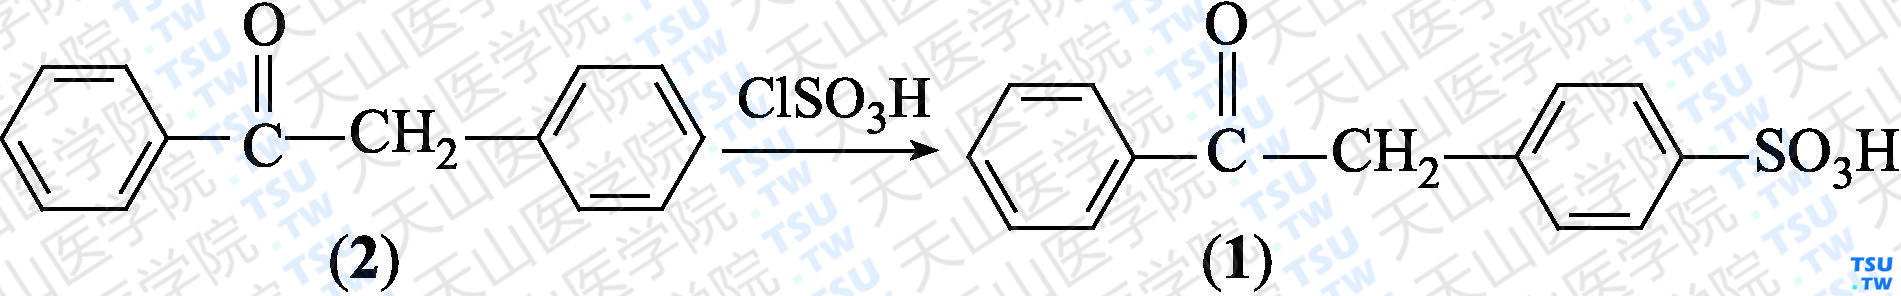 1-苯基-2-（4-磺酸基苯基）乙酮（分子式：C<sub>14</sub>H<sub>12</sub>O<sub>4</sub>S）的合成方法路线及其结构式